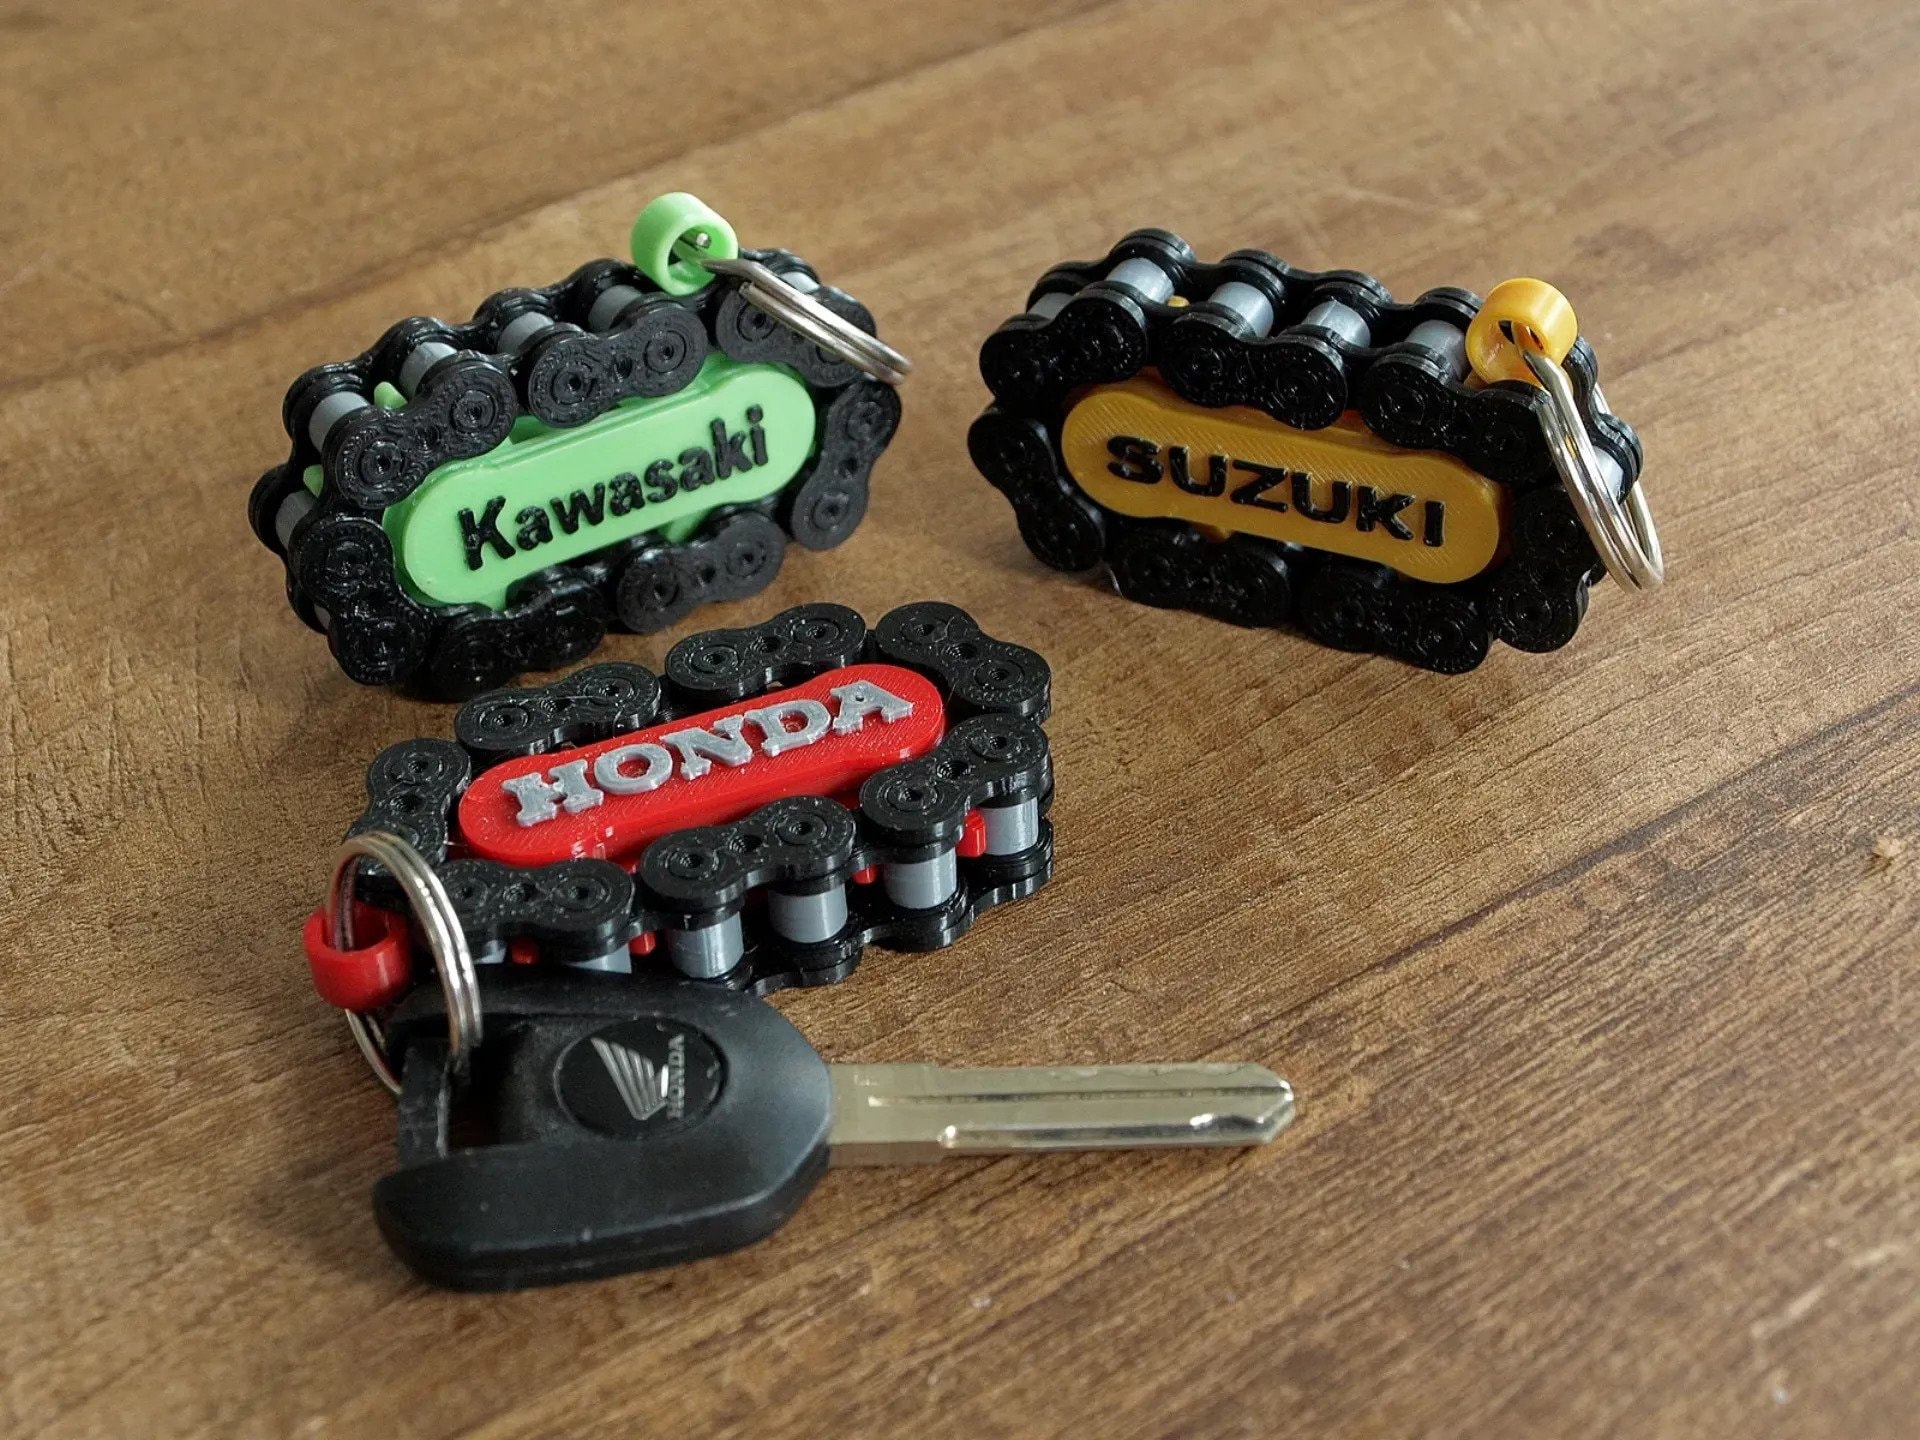 KTM Lanyard For Neck ID Phone Holder Strap Key Chain Bike Pit Pass UK  Seller